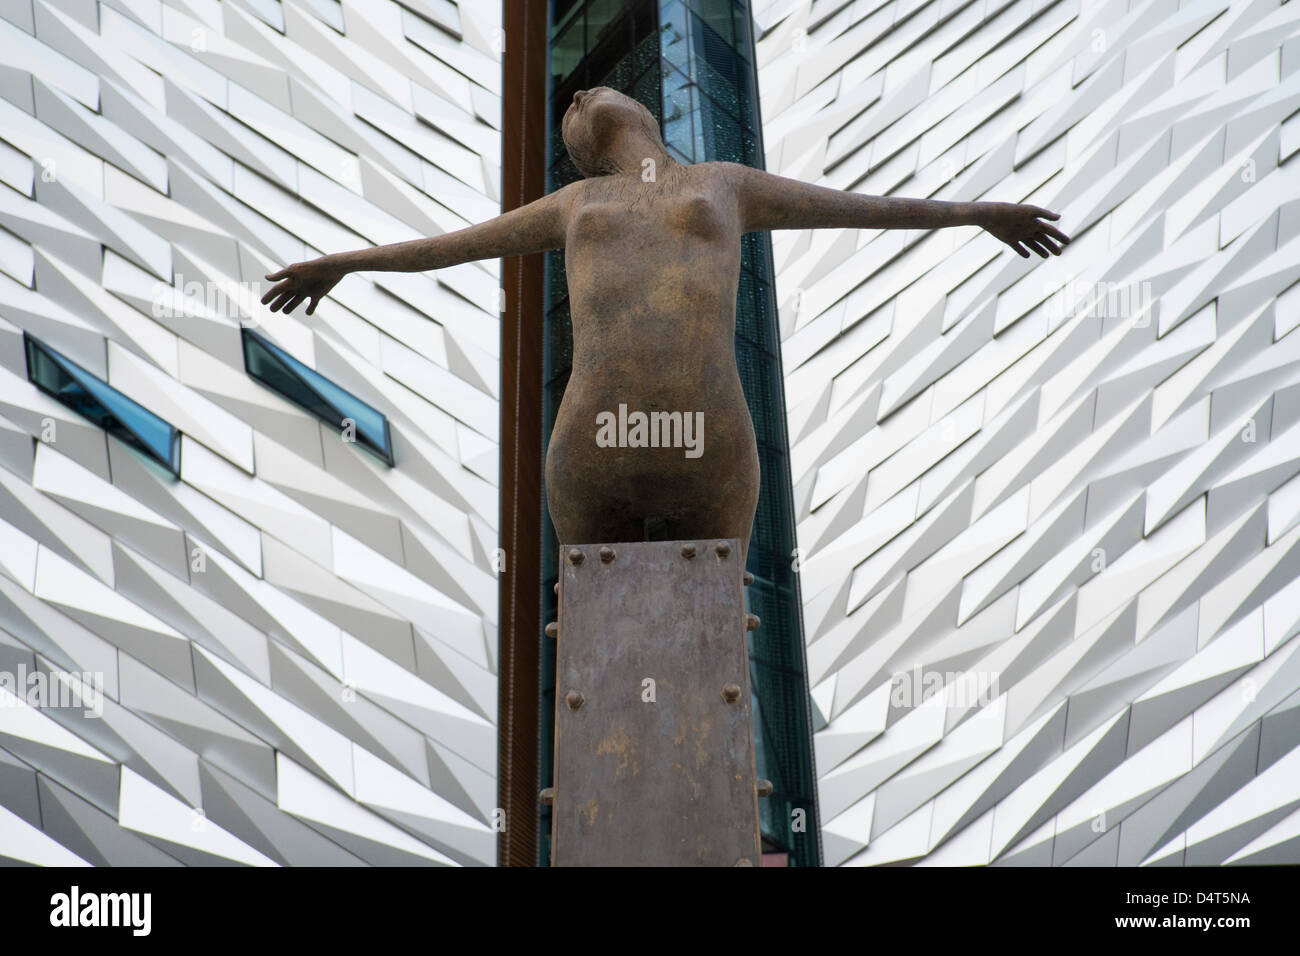 Rowan Gillespie's sculpture Titanica in front of the Titanic museum in Belfast. Stock Photo